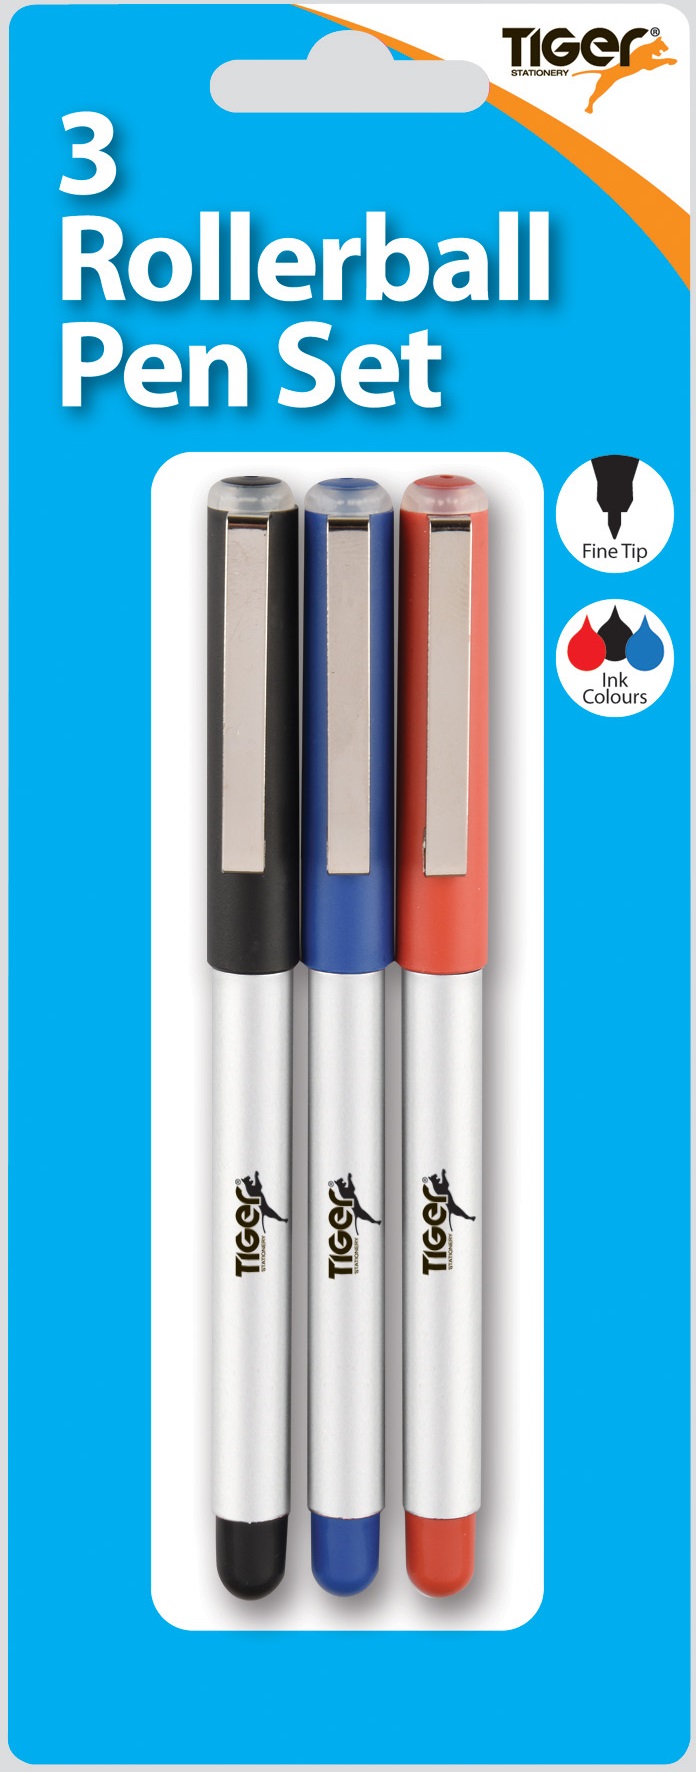 Blister Carded Rollerball Pens (3)